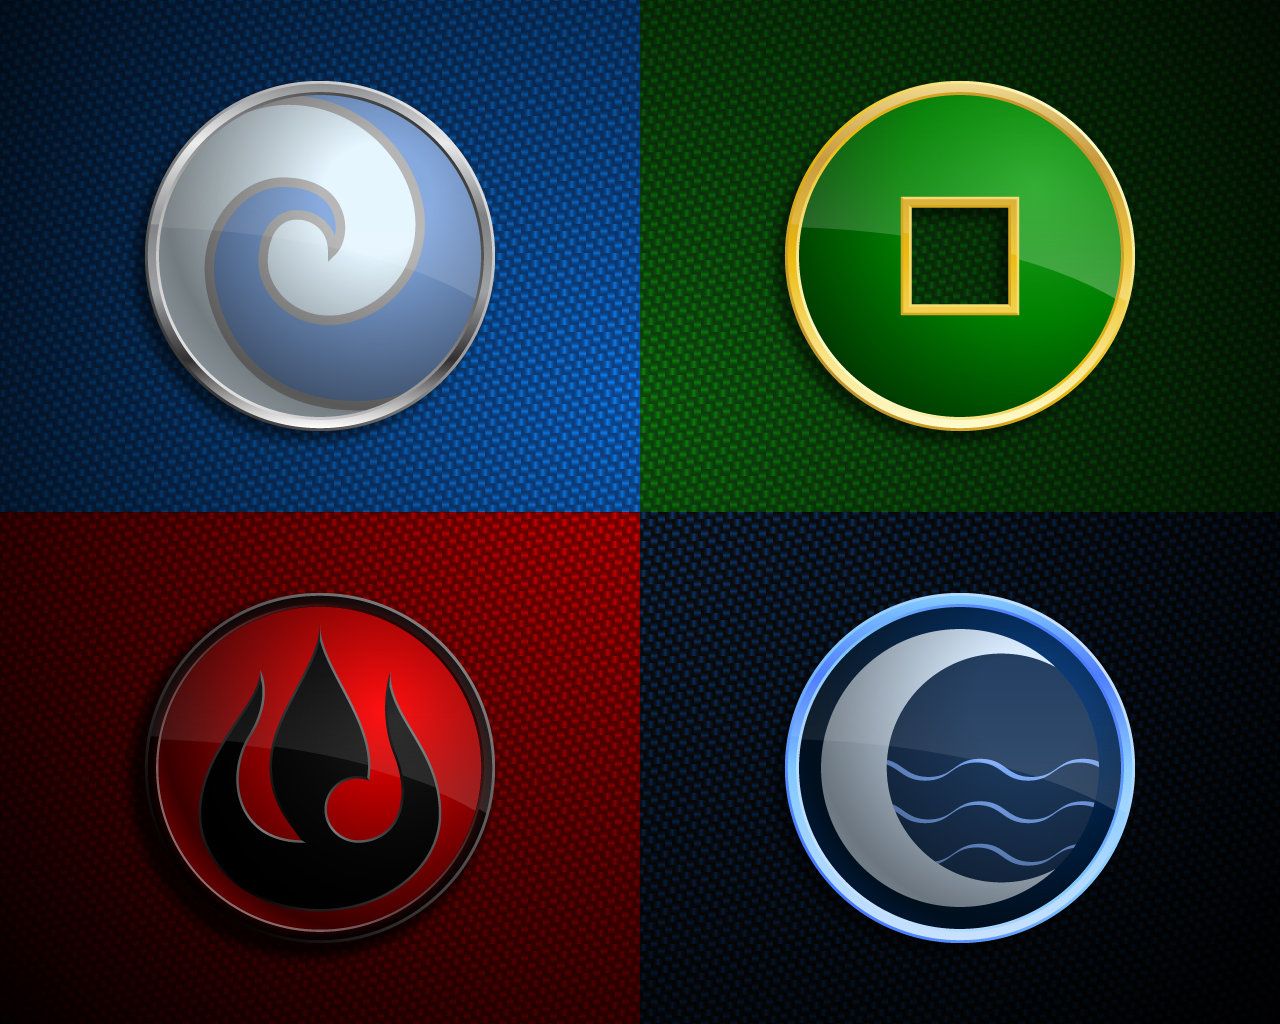 Avatar Logo Wallpaper. Element symbols, Elements tattoo, Avatar the last airbender